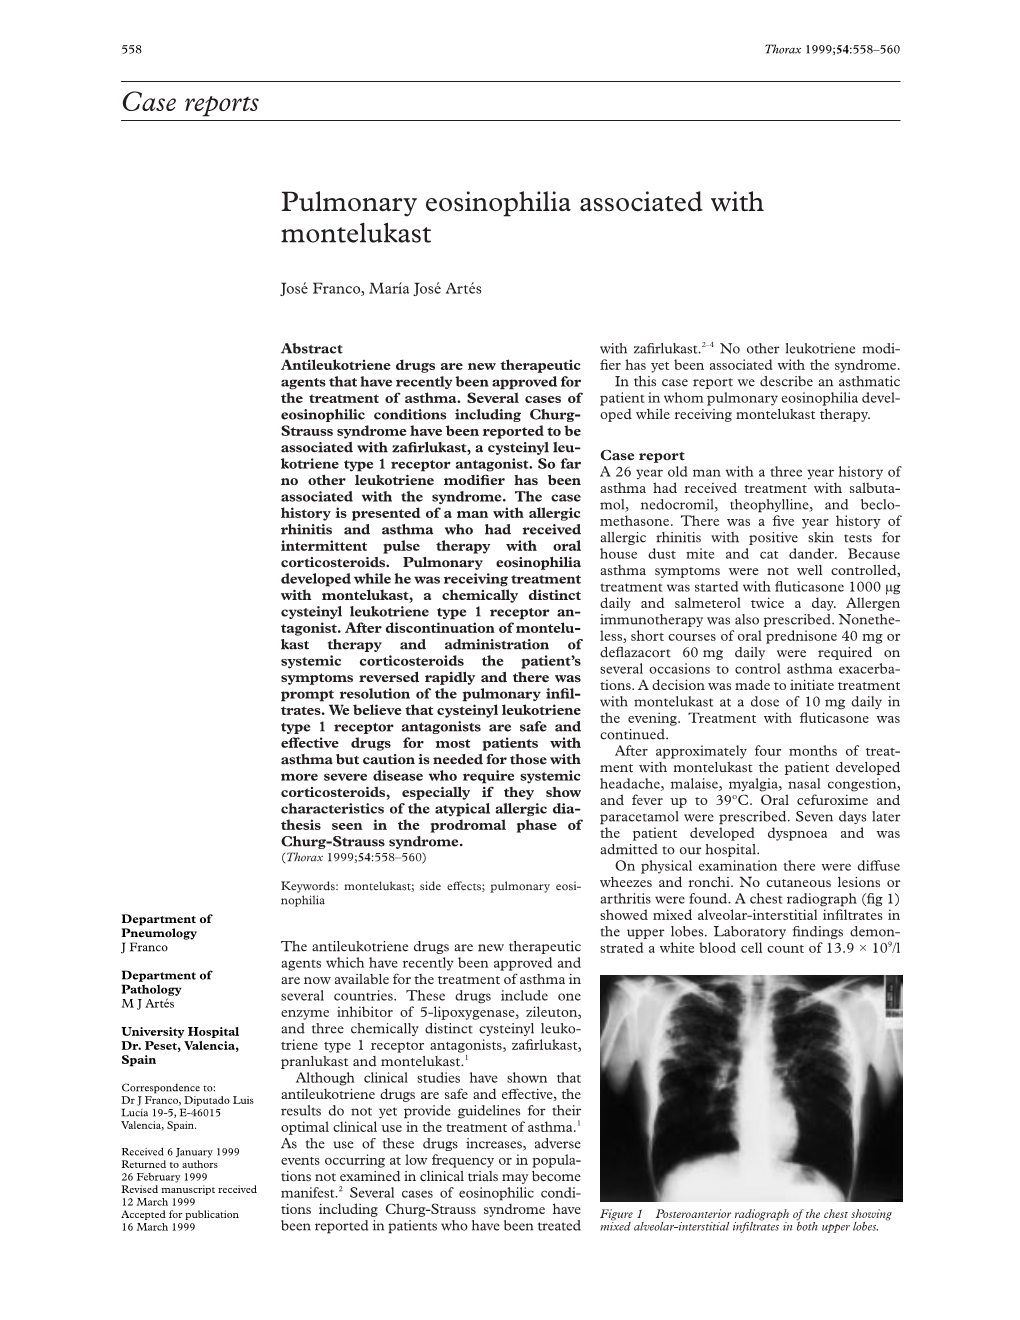 Case Reports Pulmonary Eosinophilia Associated with Montelukast